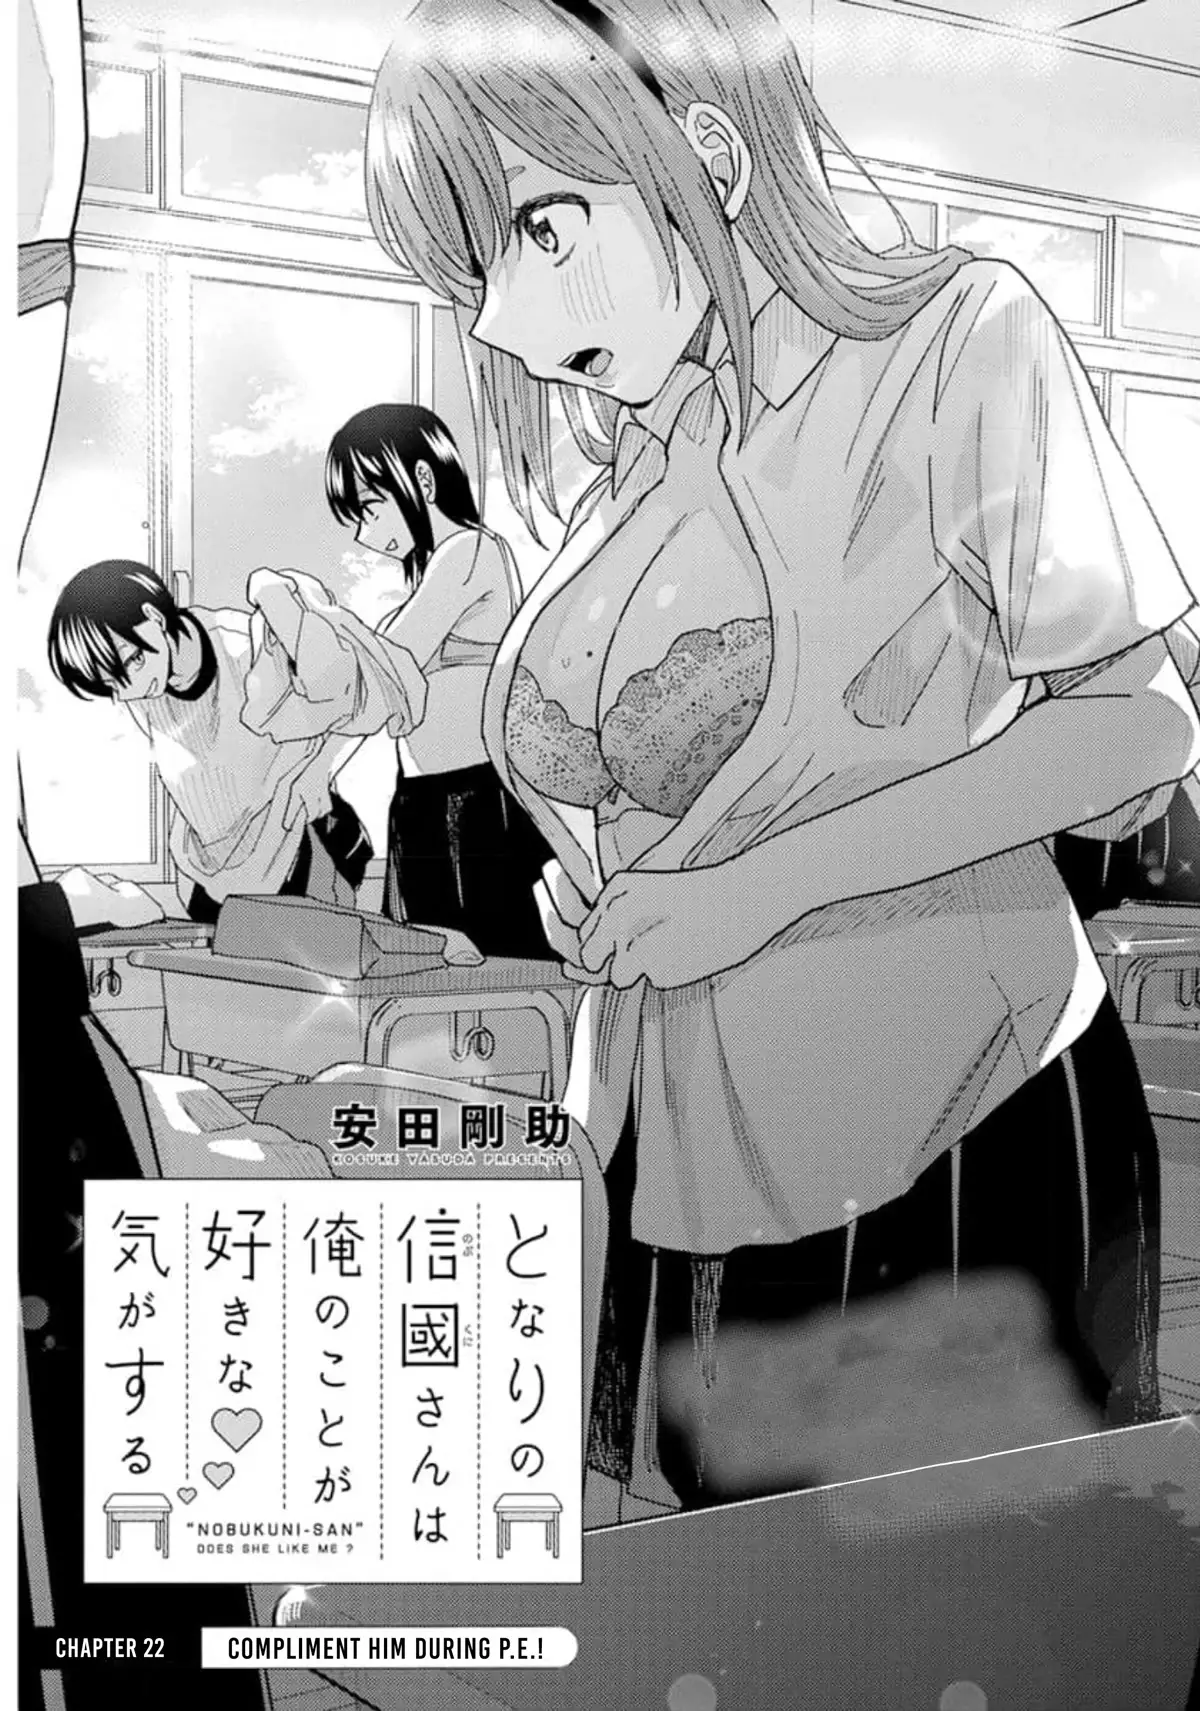 "nobukuni-San" Does She Like Me? - 22 page 2-20552166